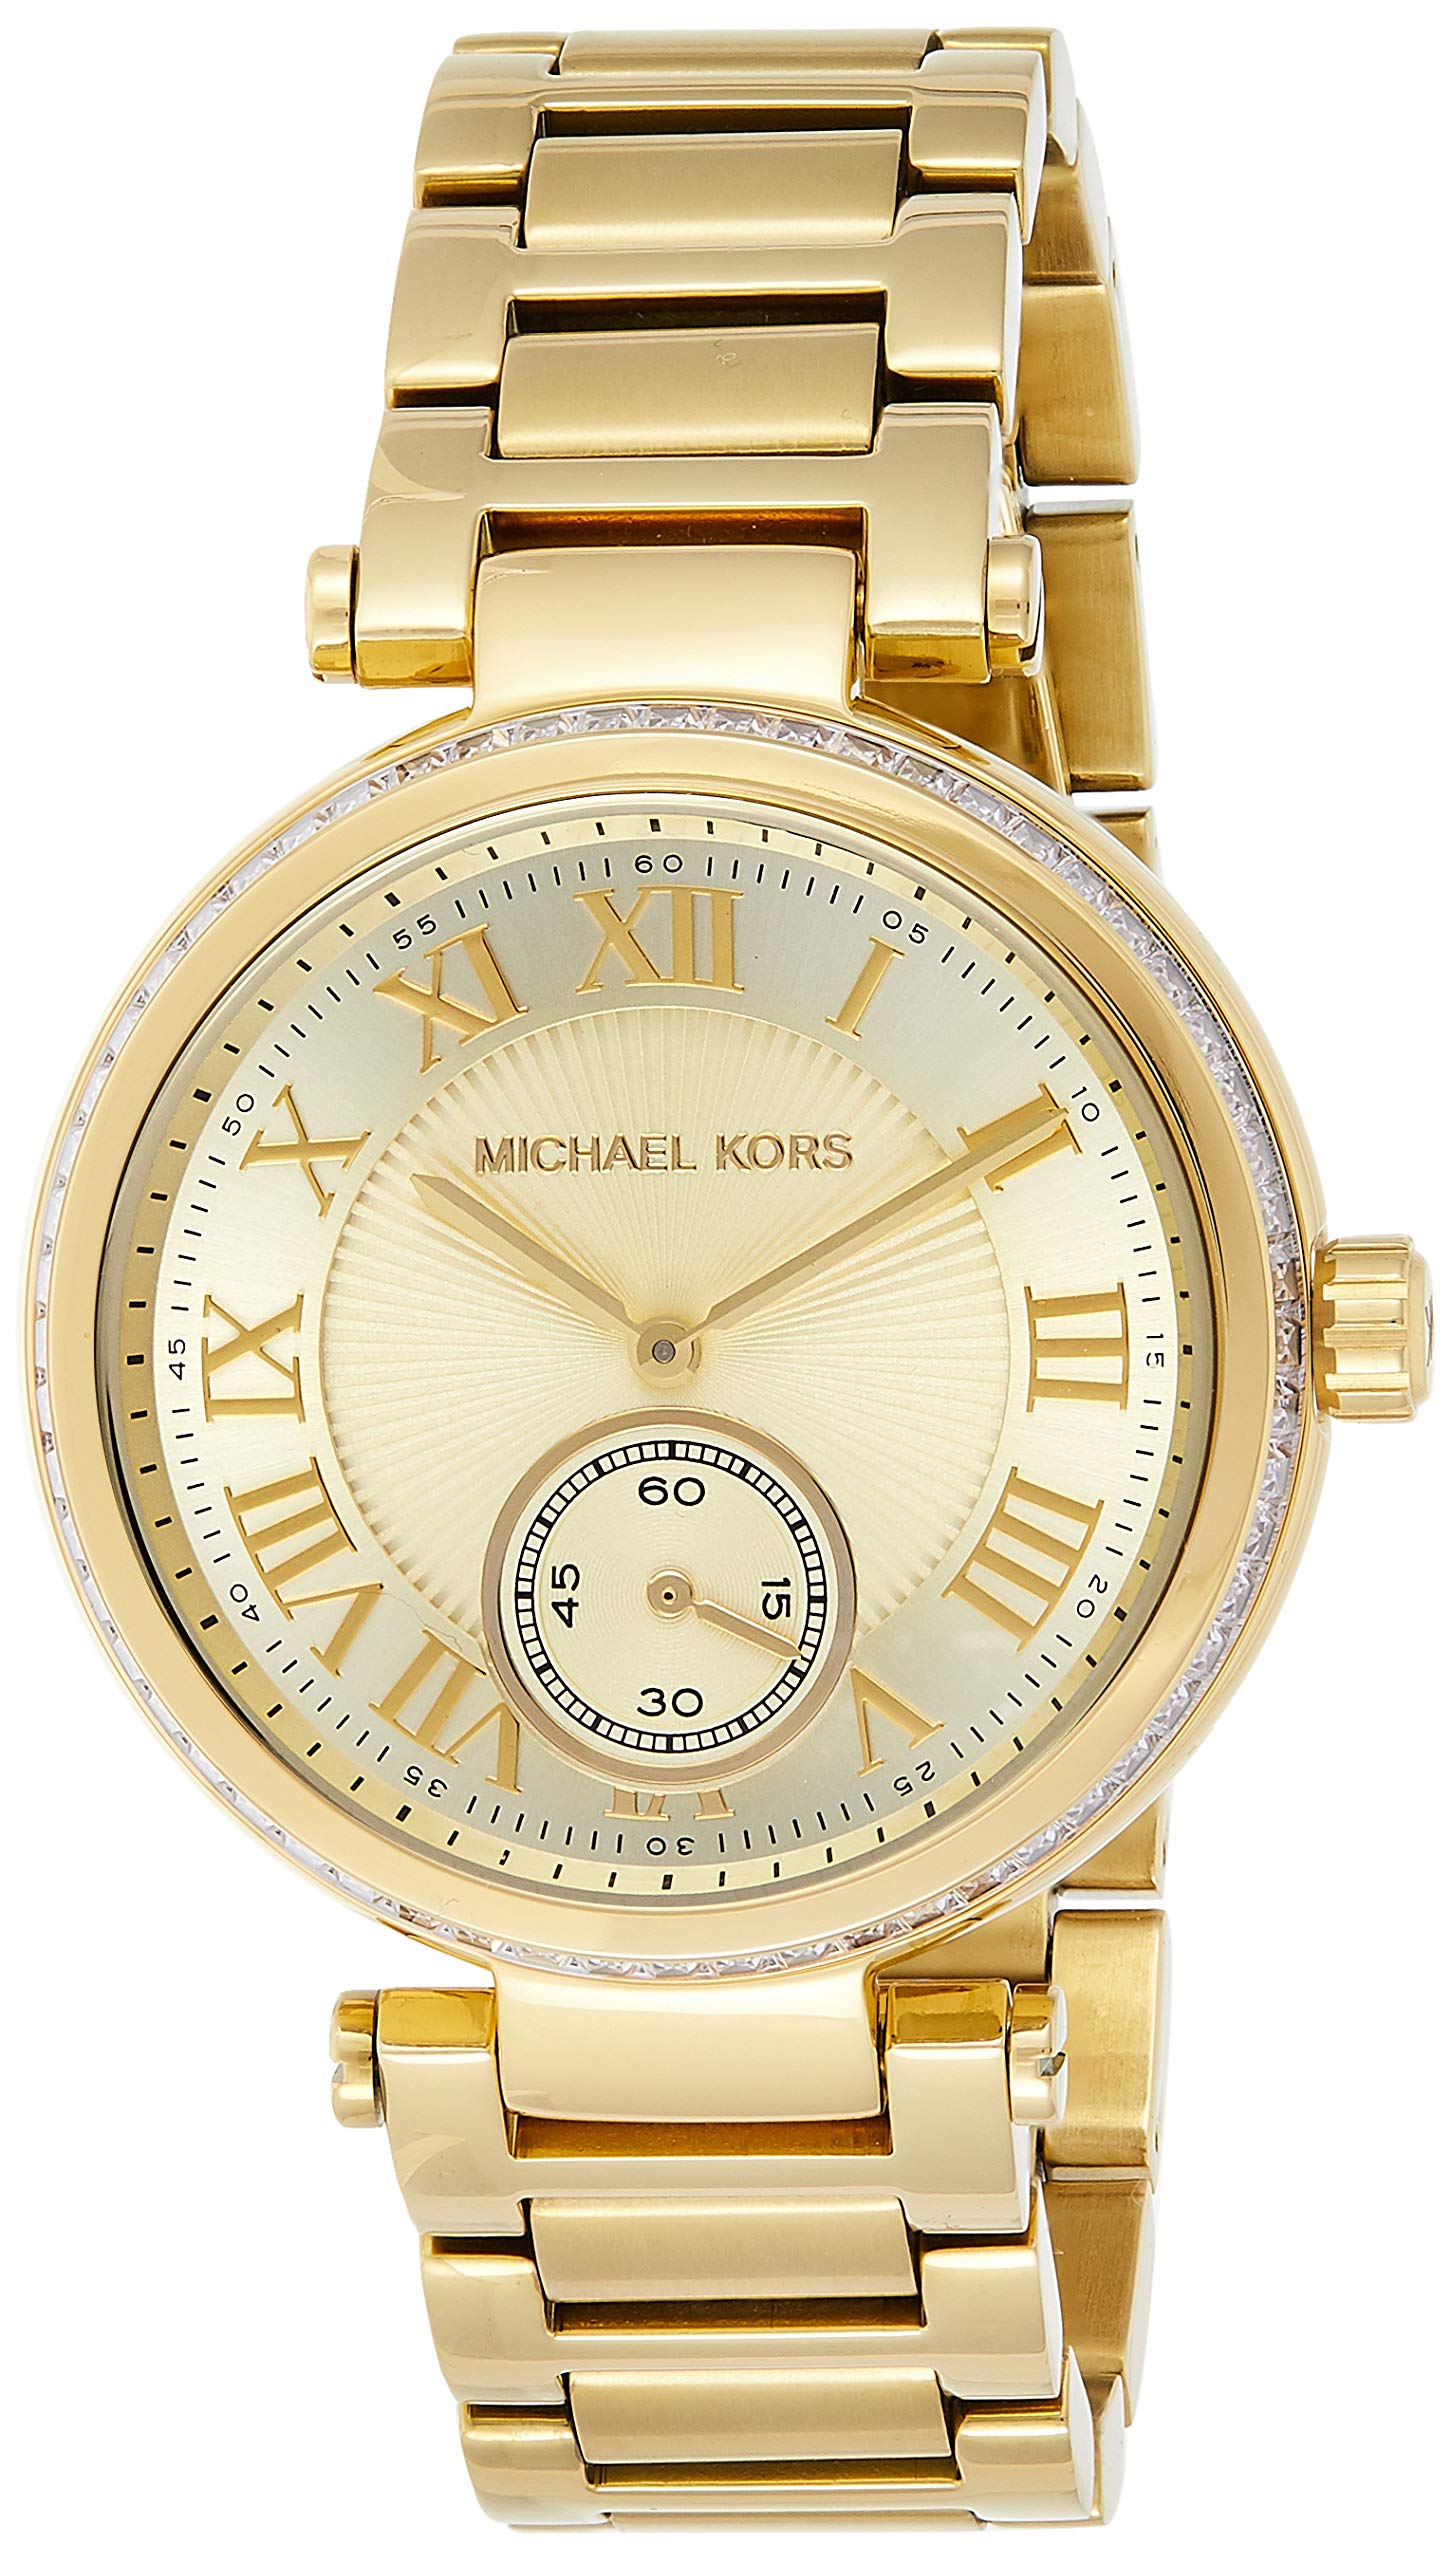 Michael Kors Skylar Gold Dial Gold Steel Strap Watch for Women - MK5867